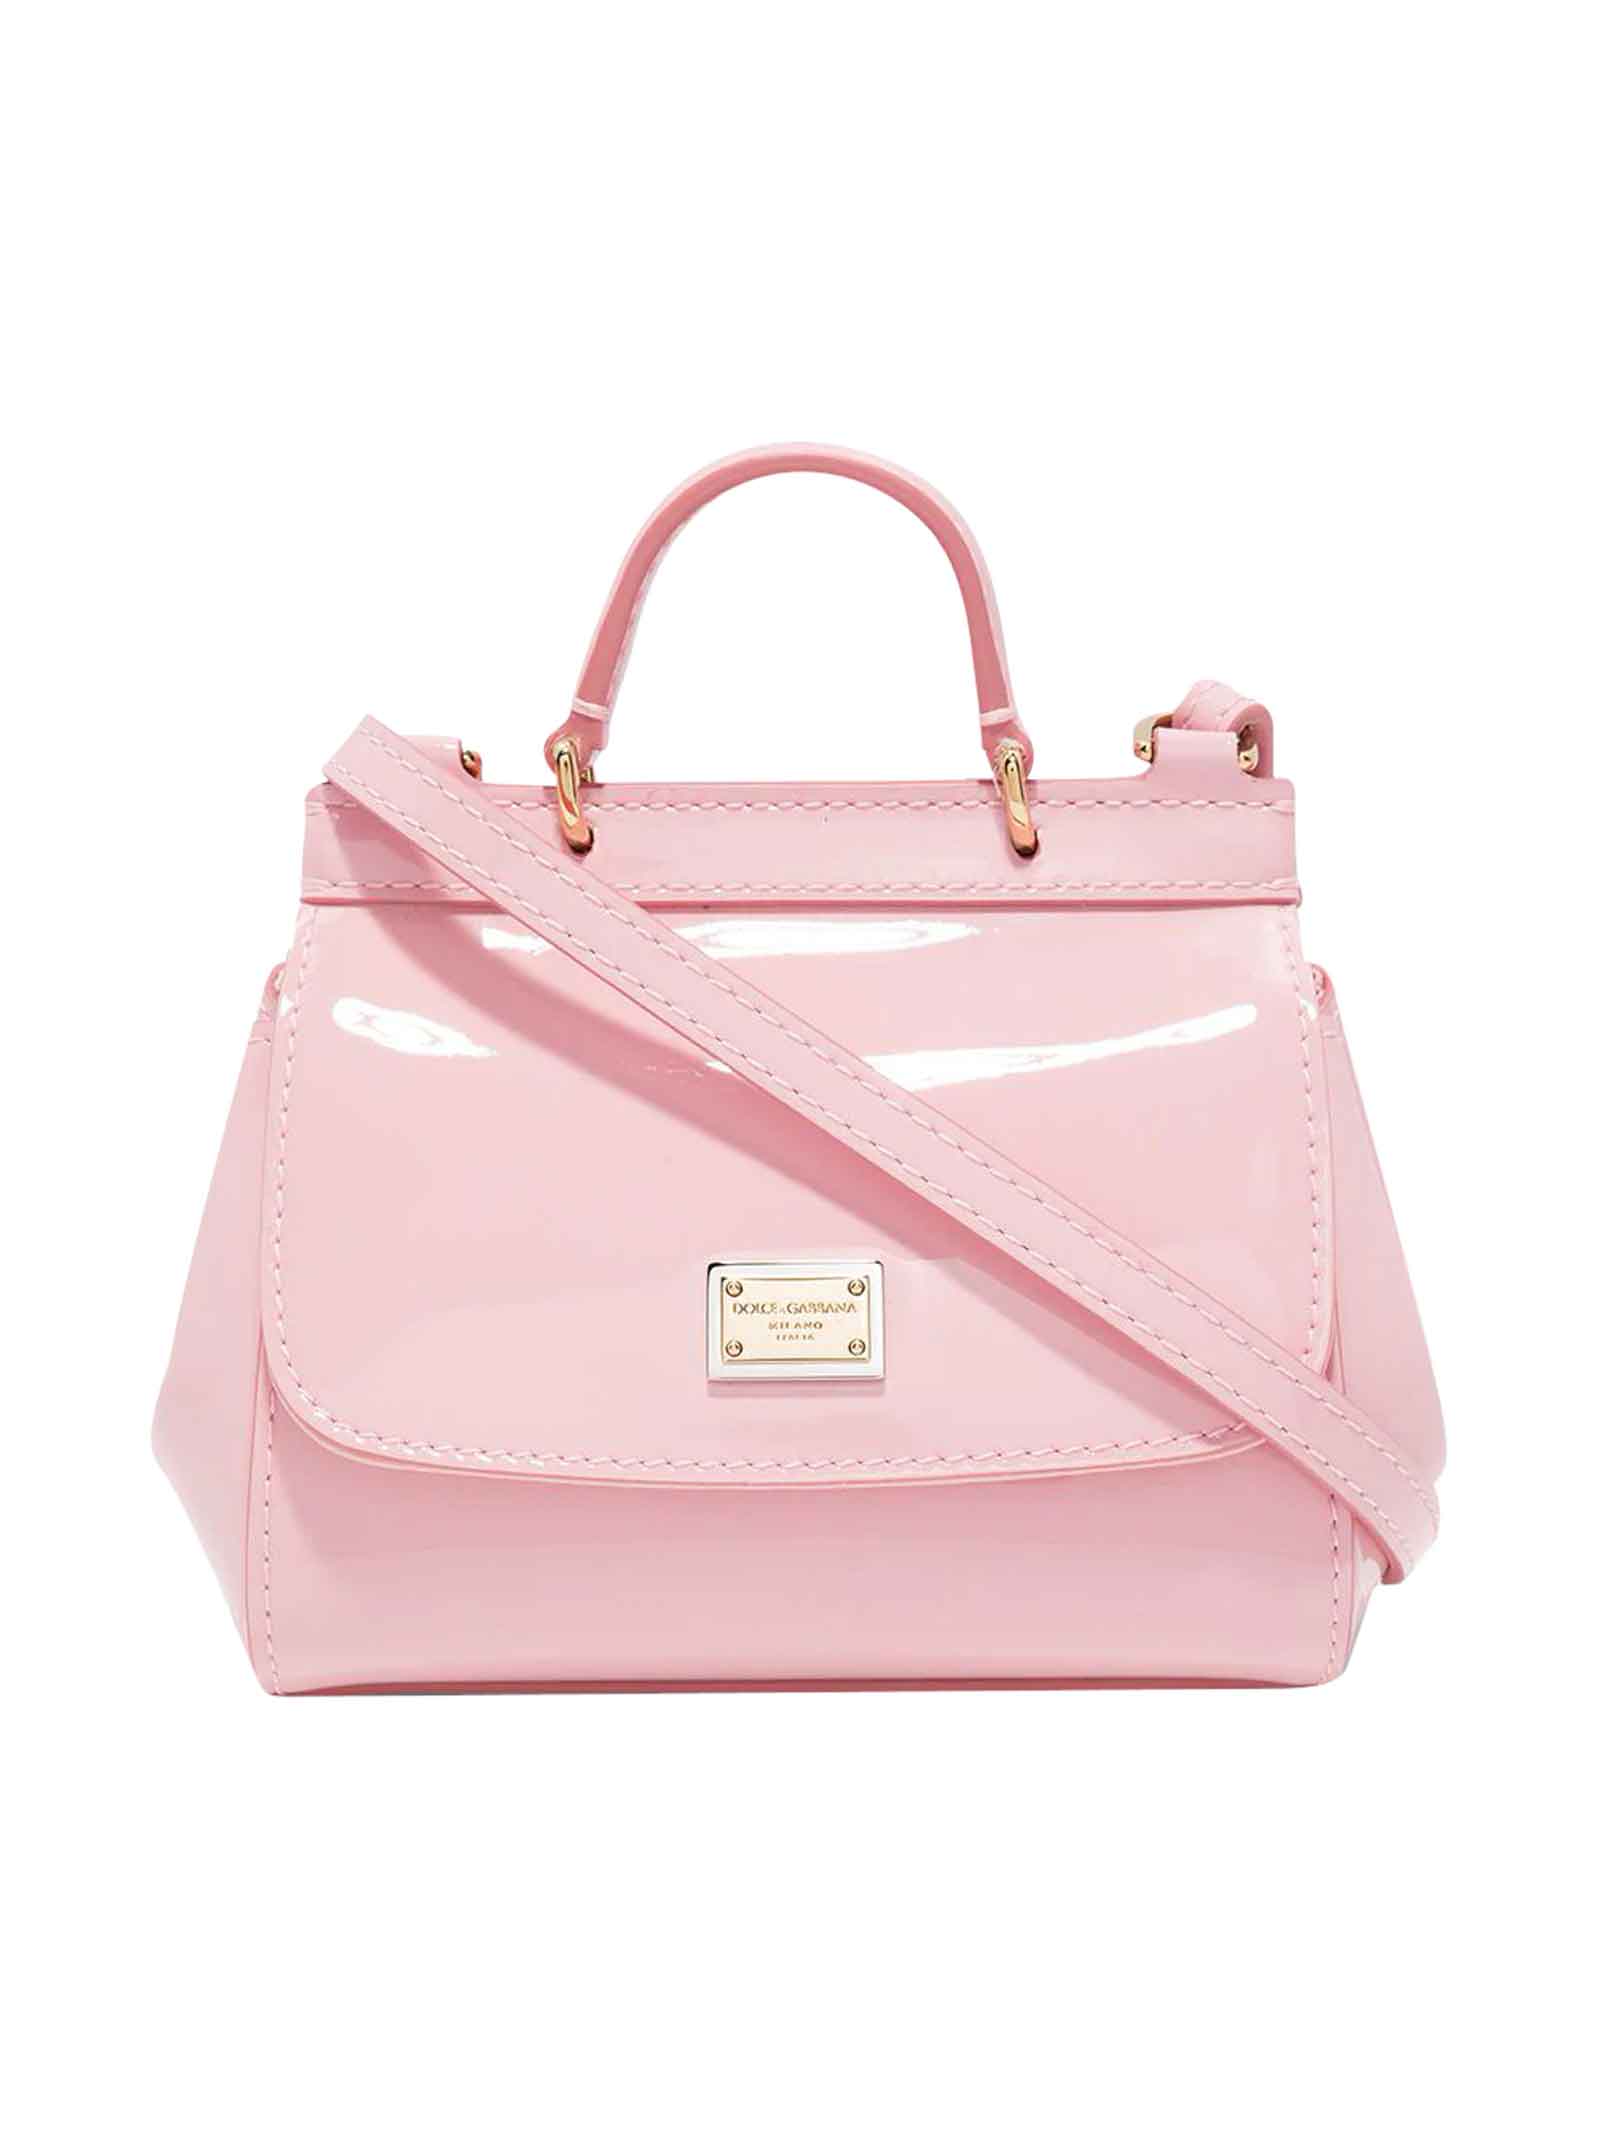 Dolce & Gabbana Pink Tote Bag